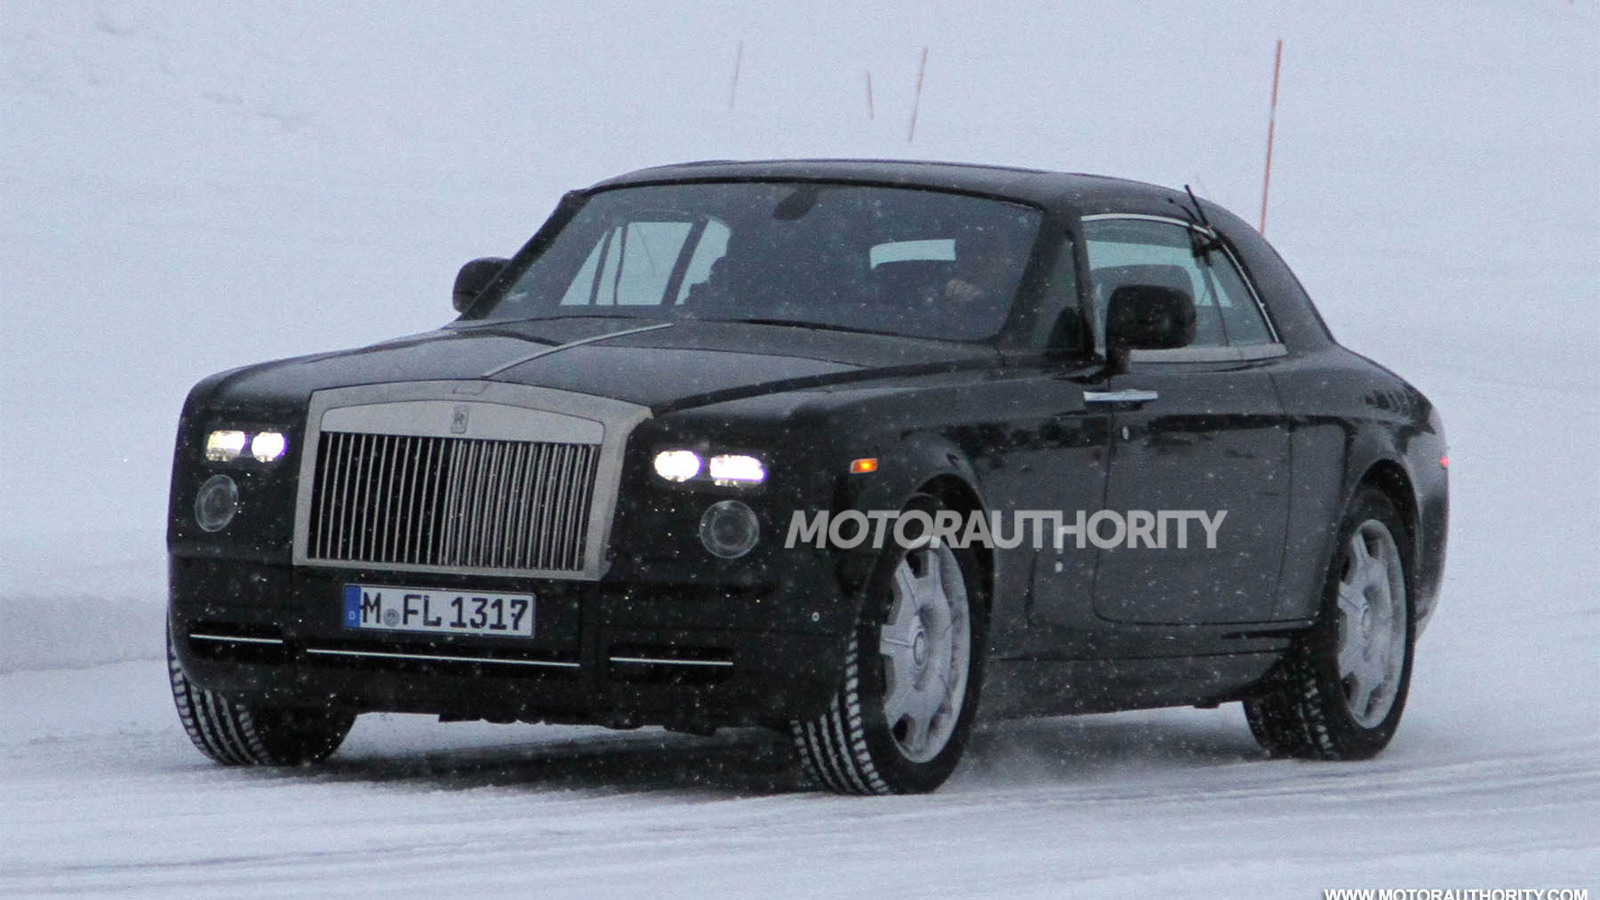 2013 Rolls-Royce Phantom Coupe facelift spy shots